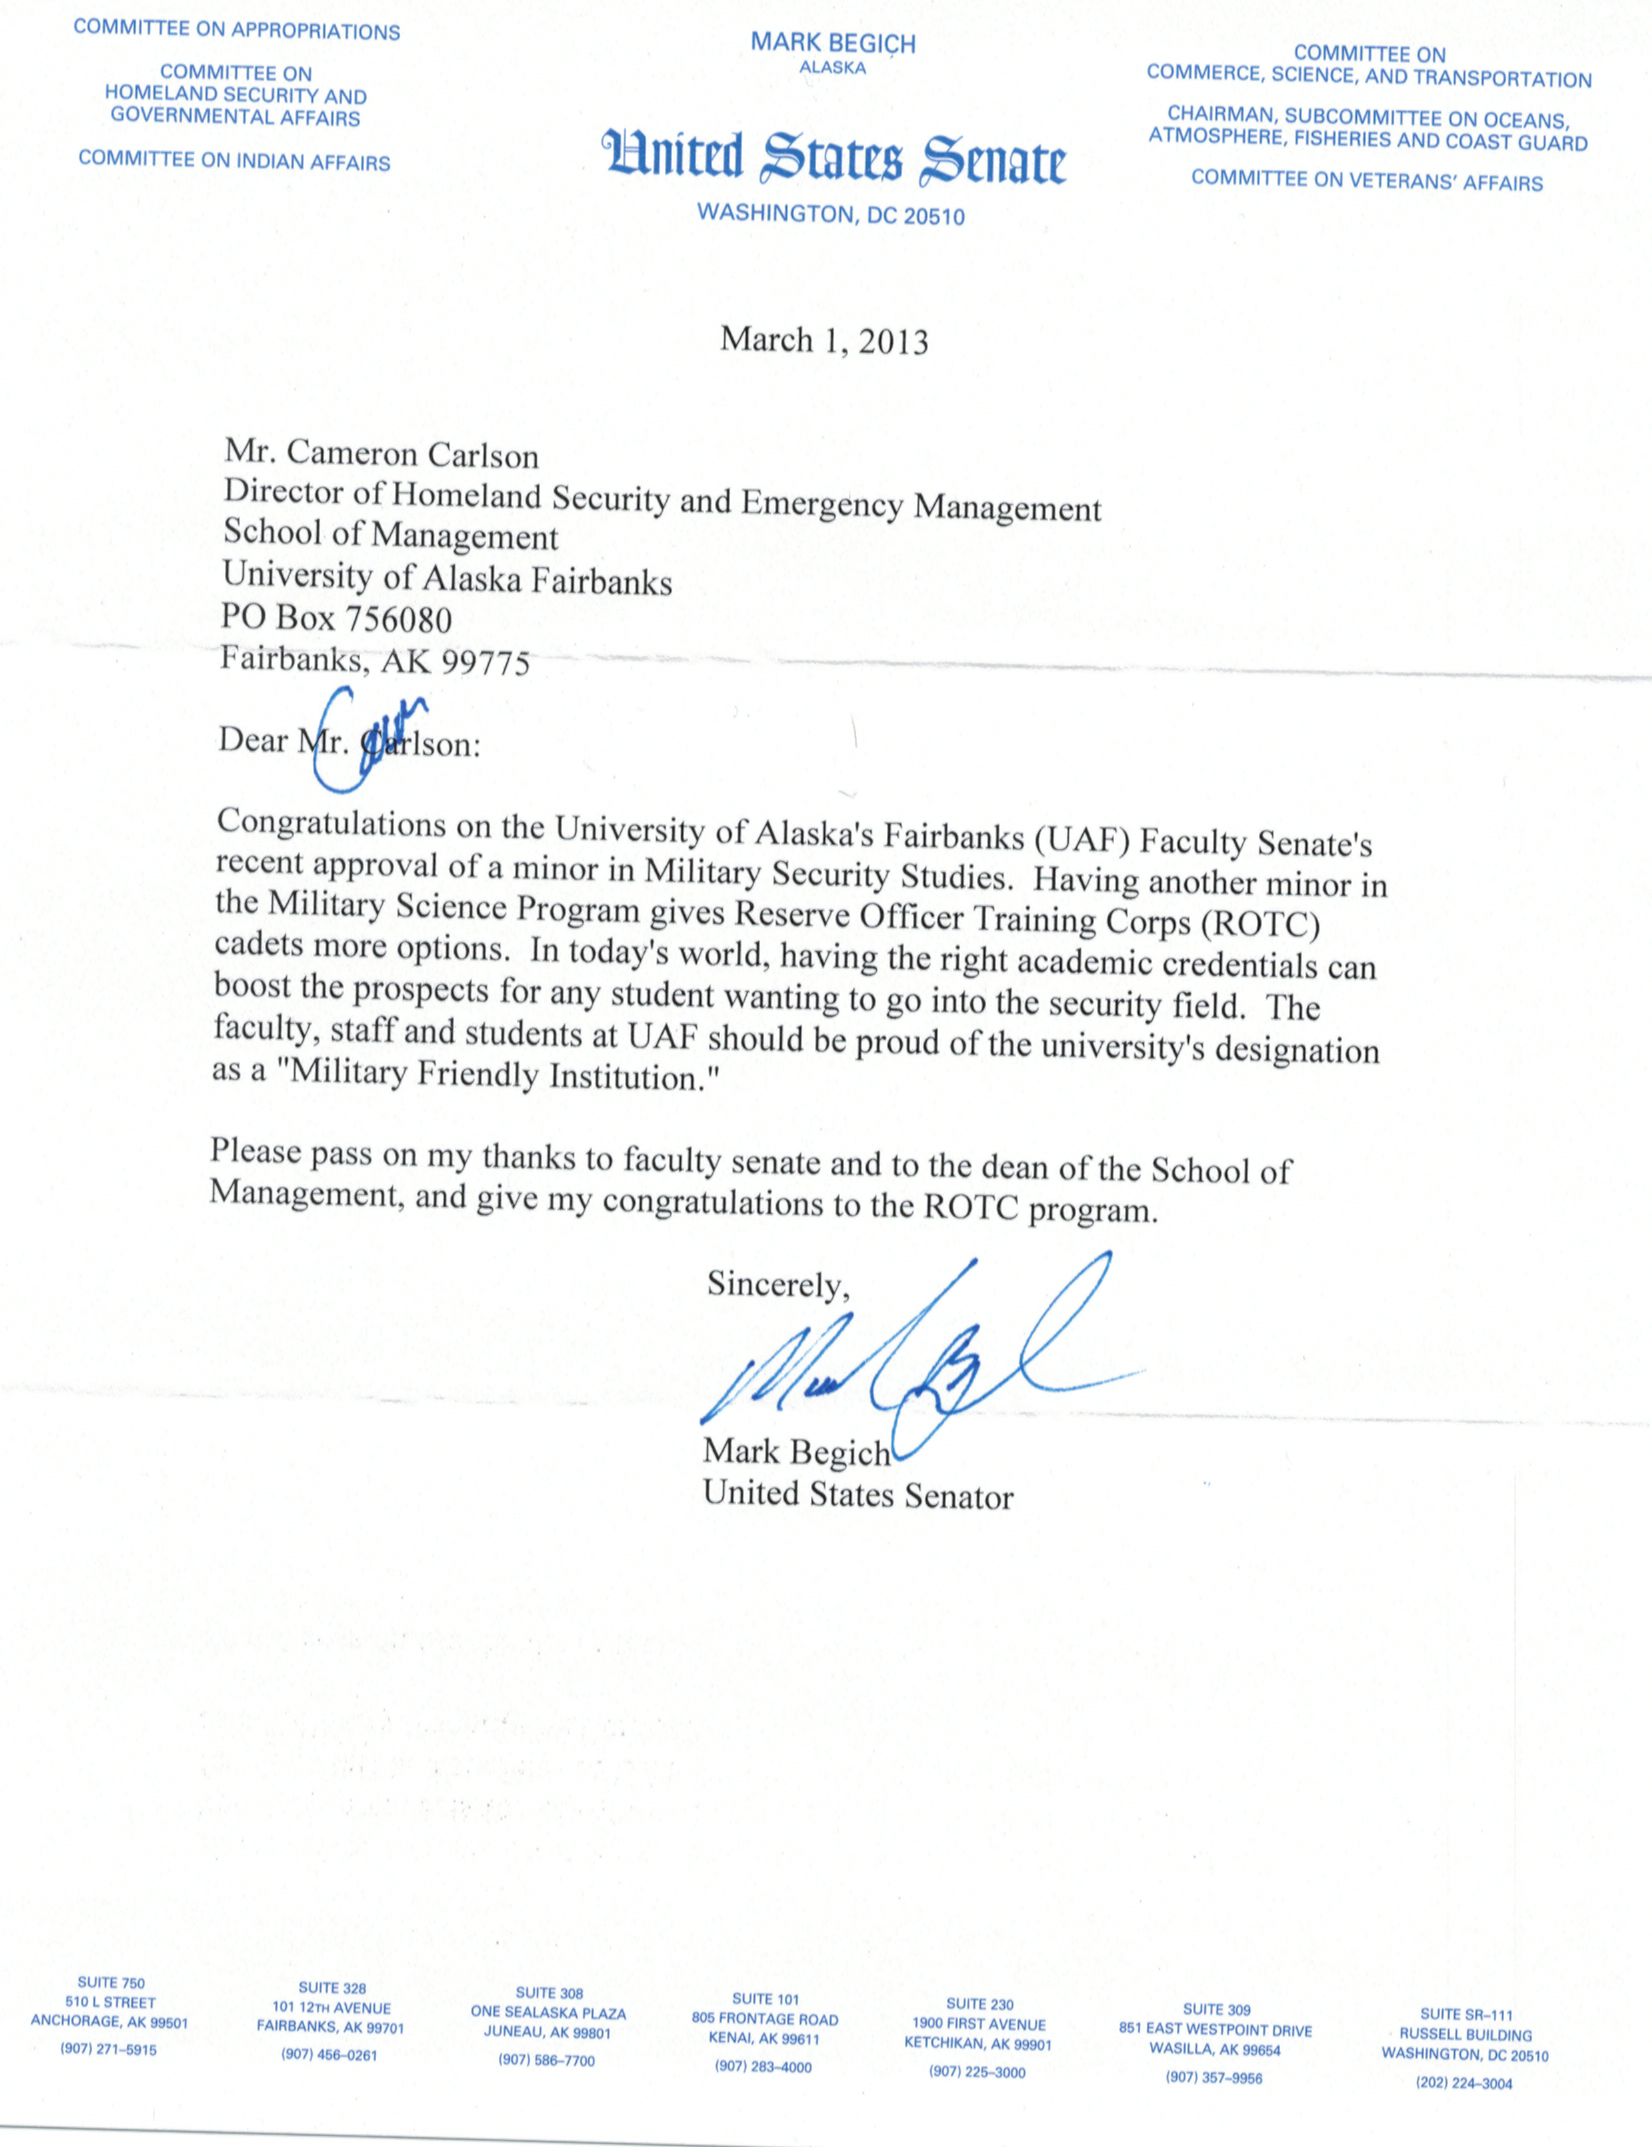 Letter of Congratulations from Senator Begich